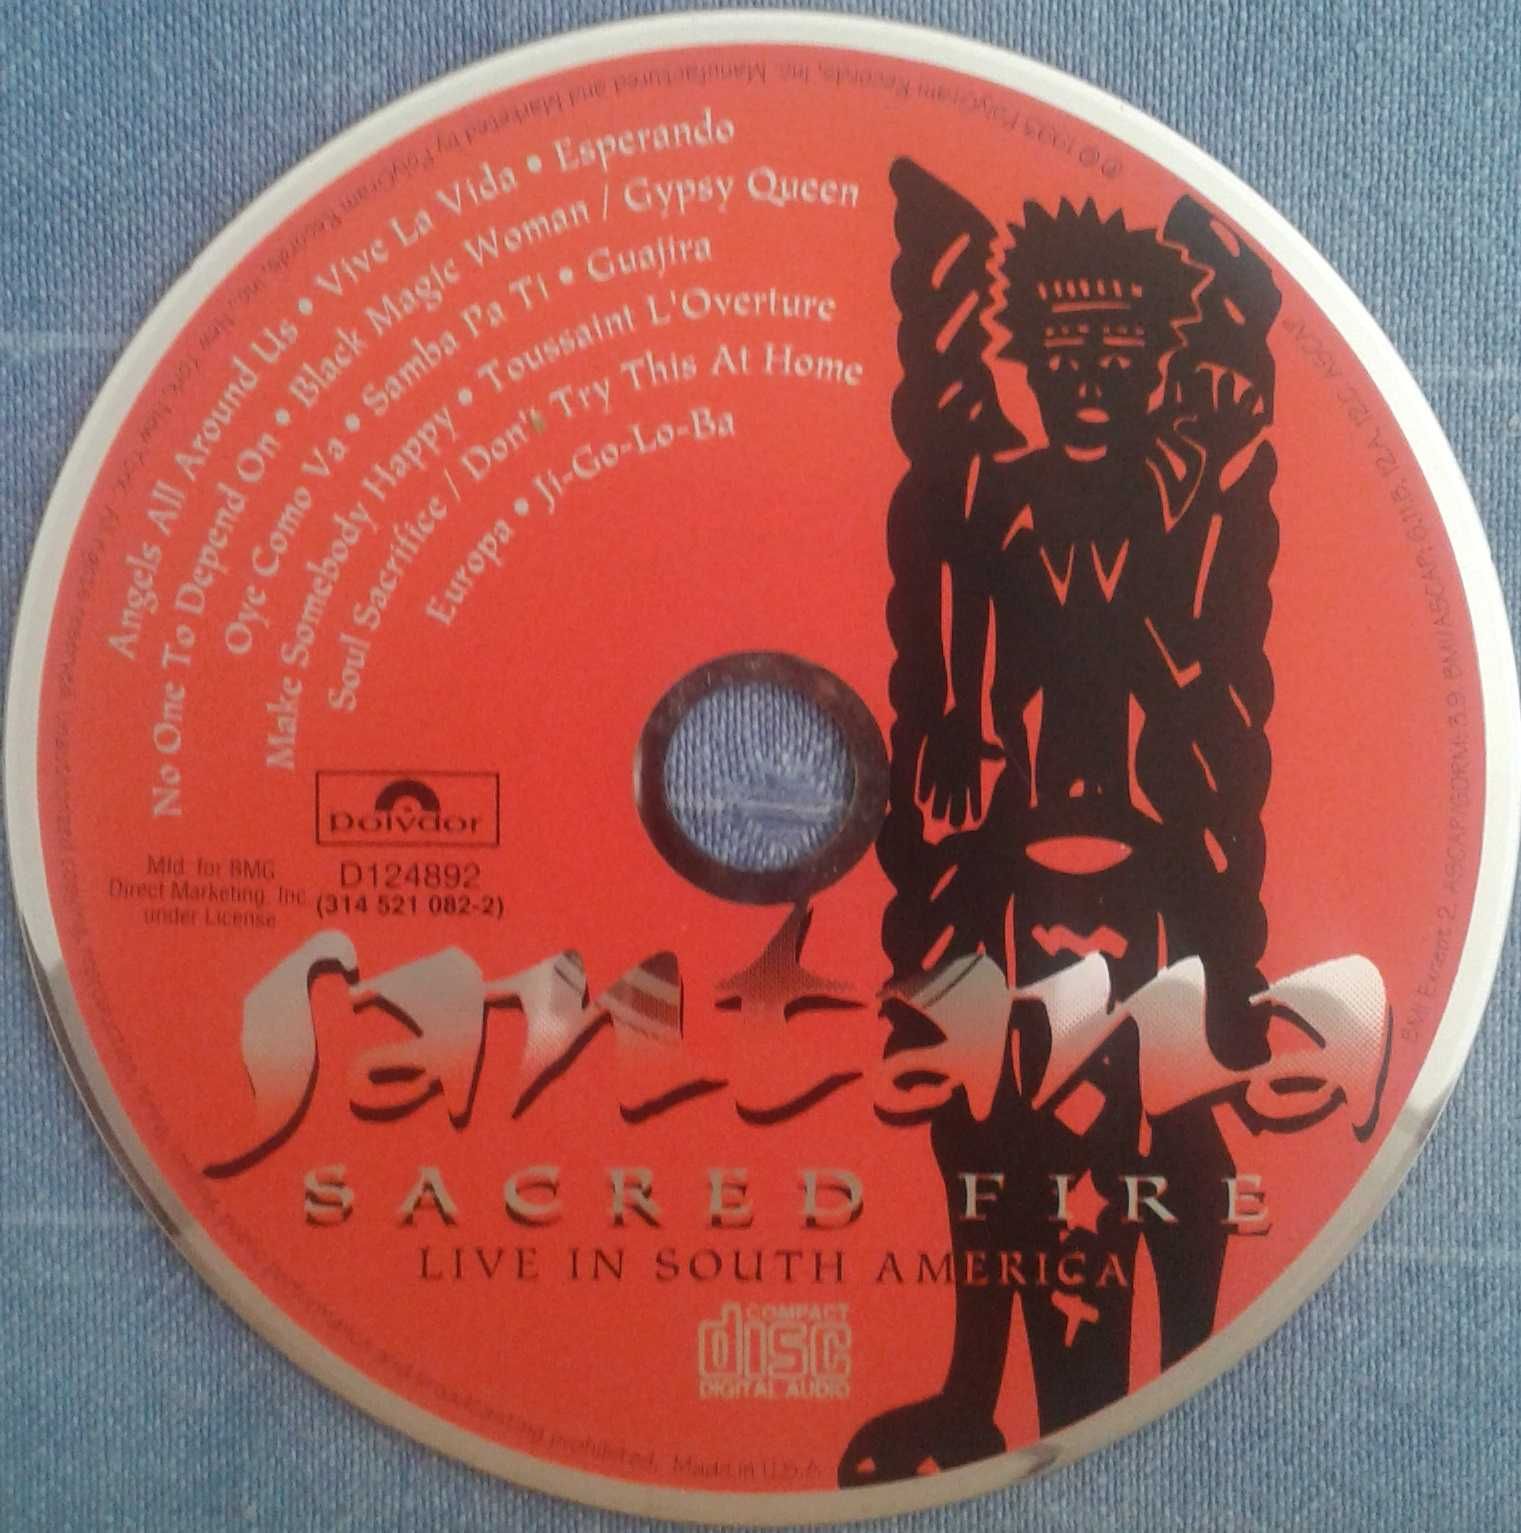 CD Santana Sacred Fire Live in South America, Inclui portes